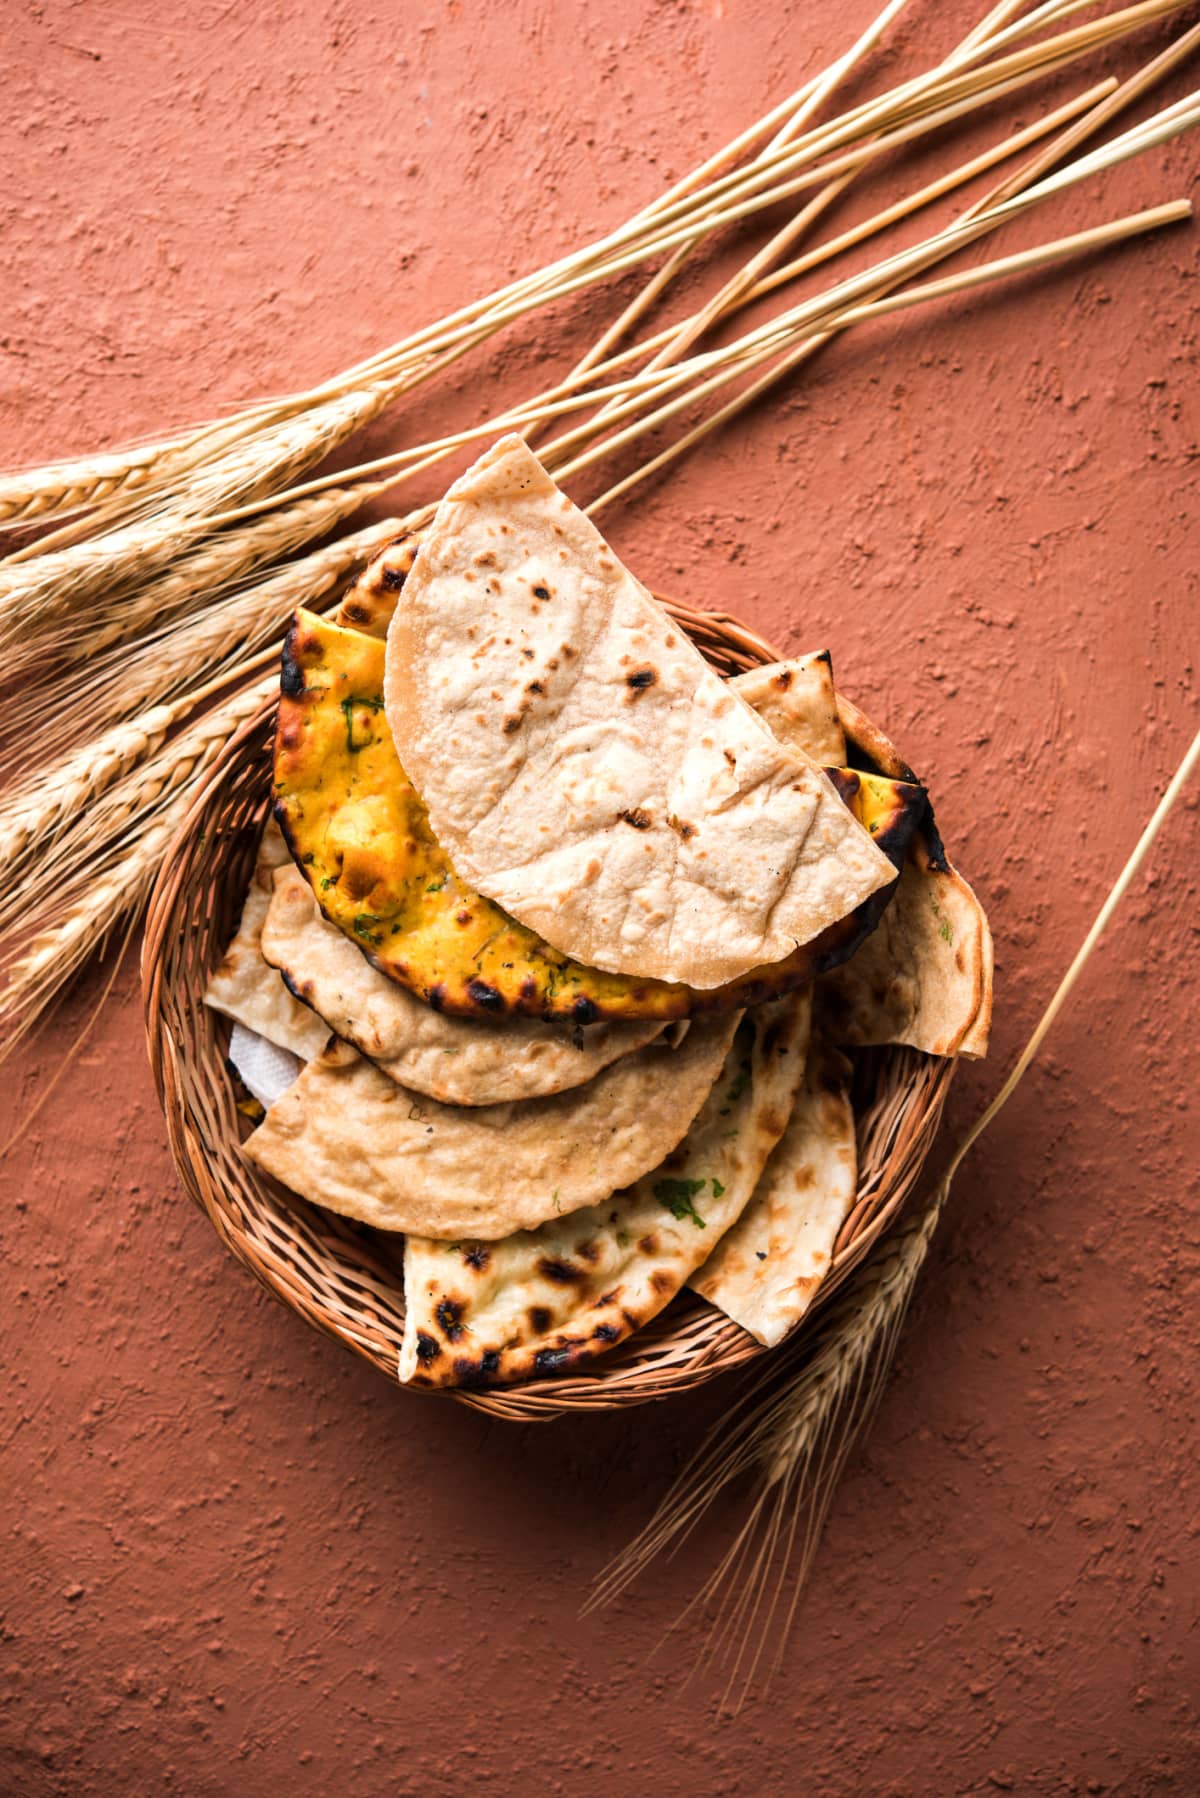 Assorted Indian Bread Basket includes chapati, tandoori roti or naan, paratha, kulcha, fulka, missi roti